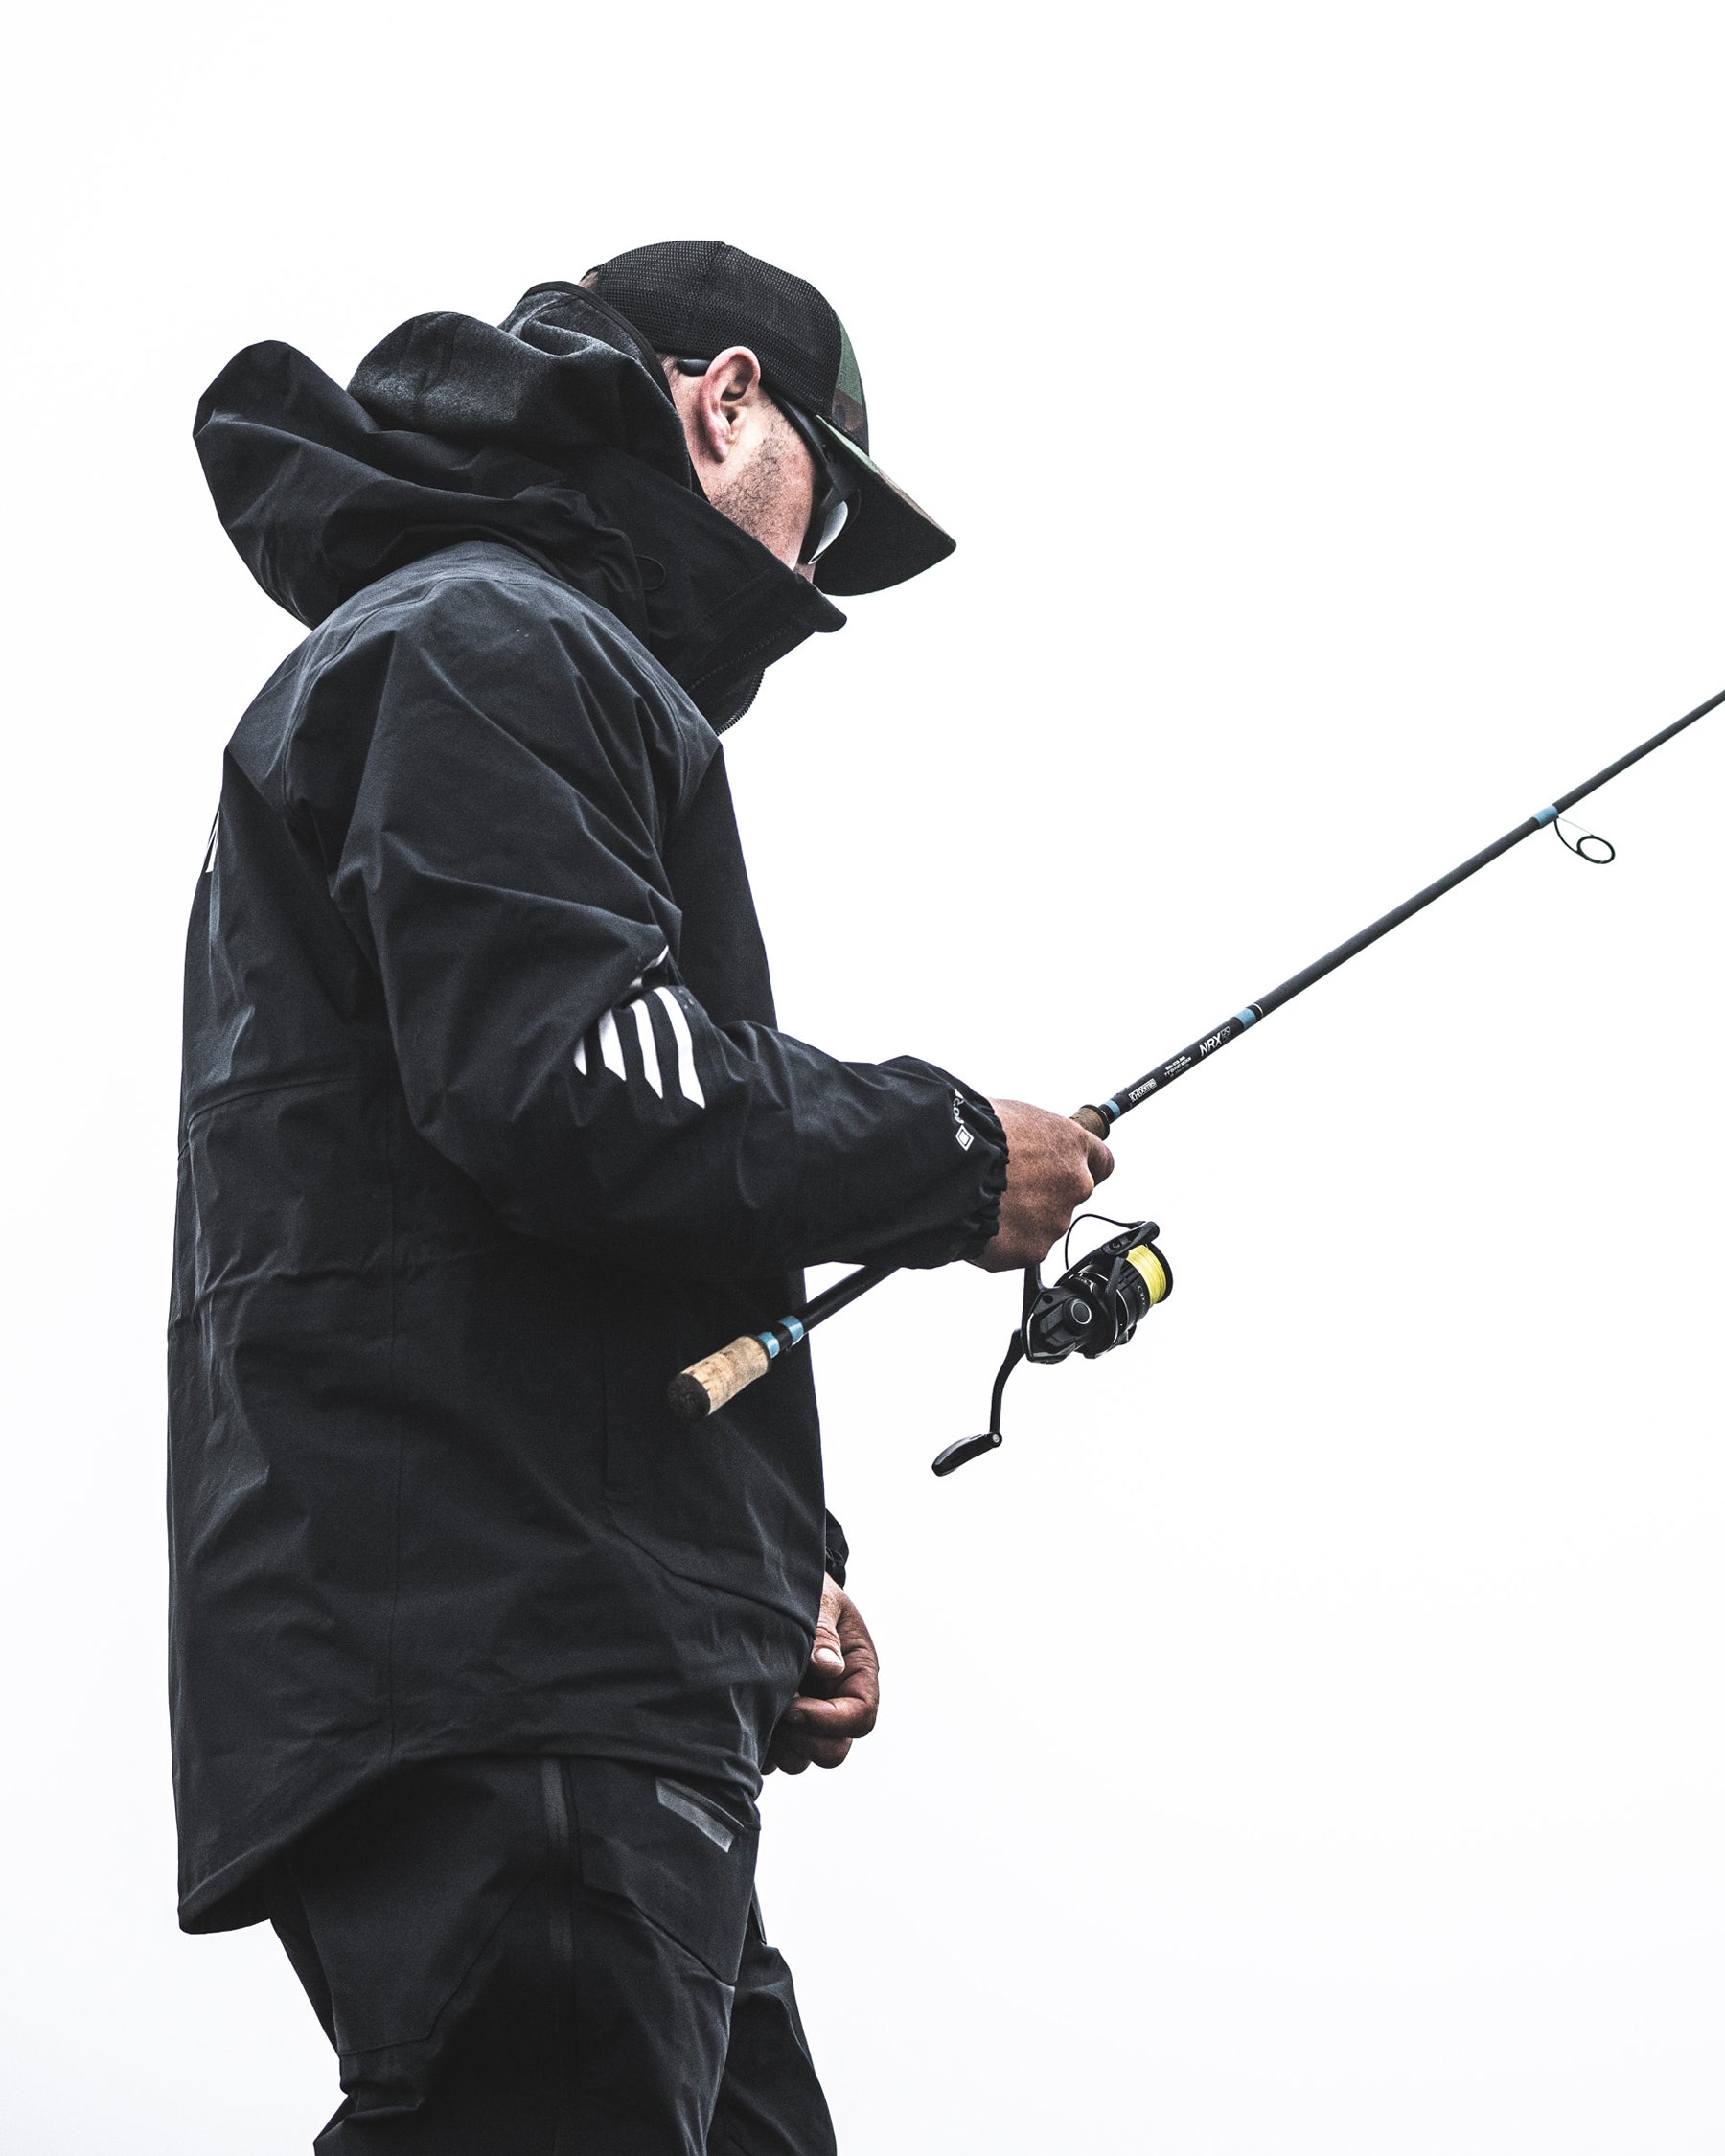 M's ProDry Fishing Jacket | Simms Fishing Products